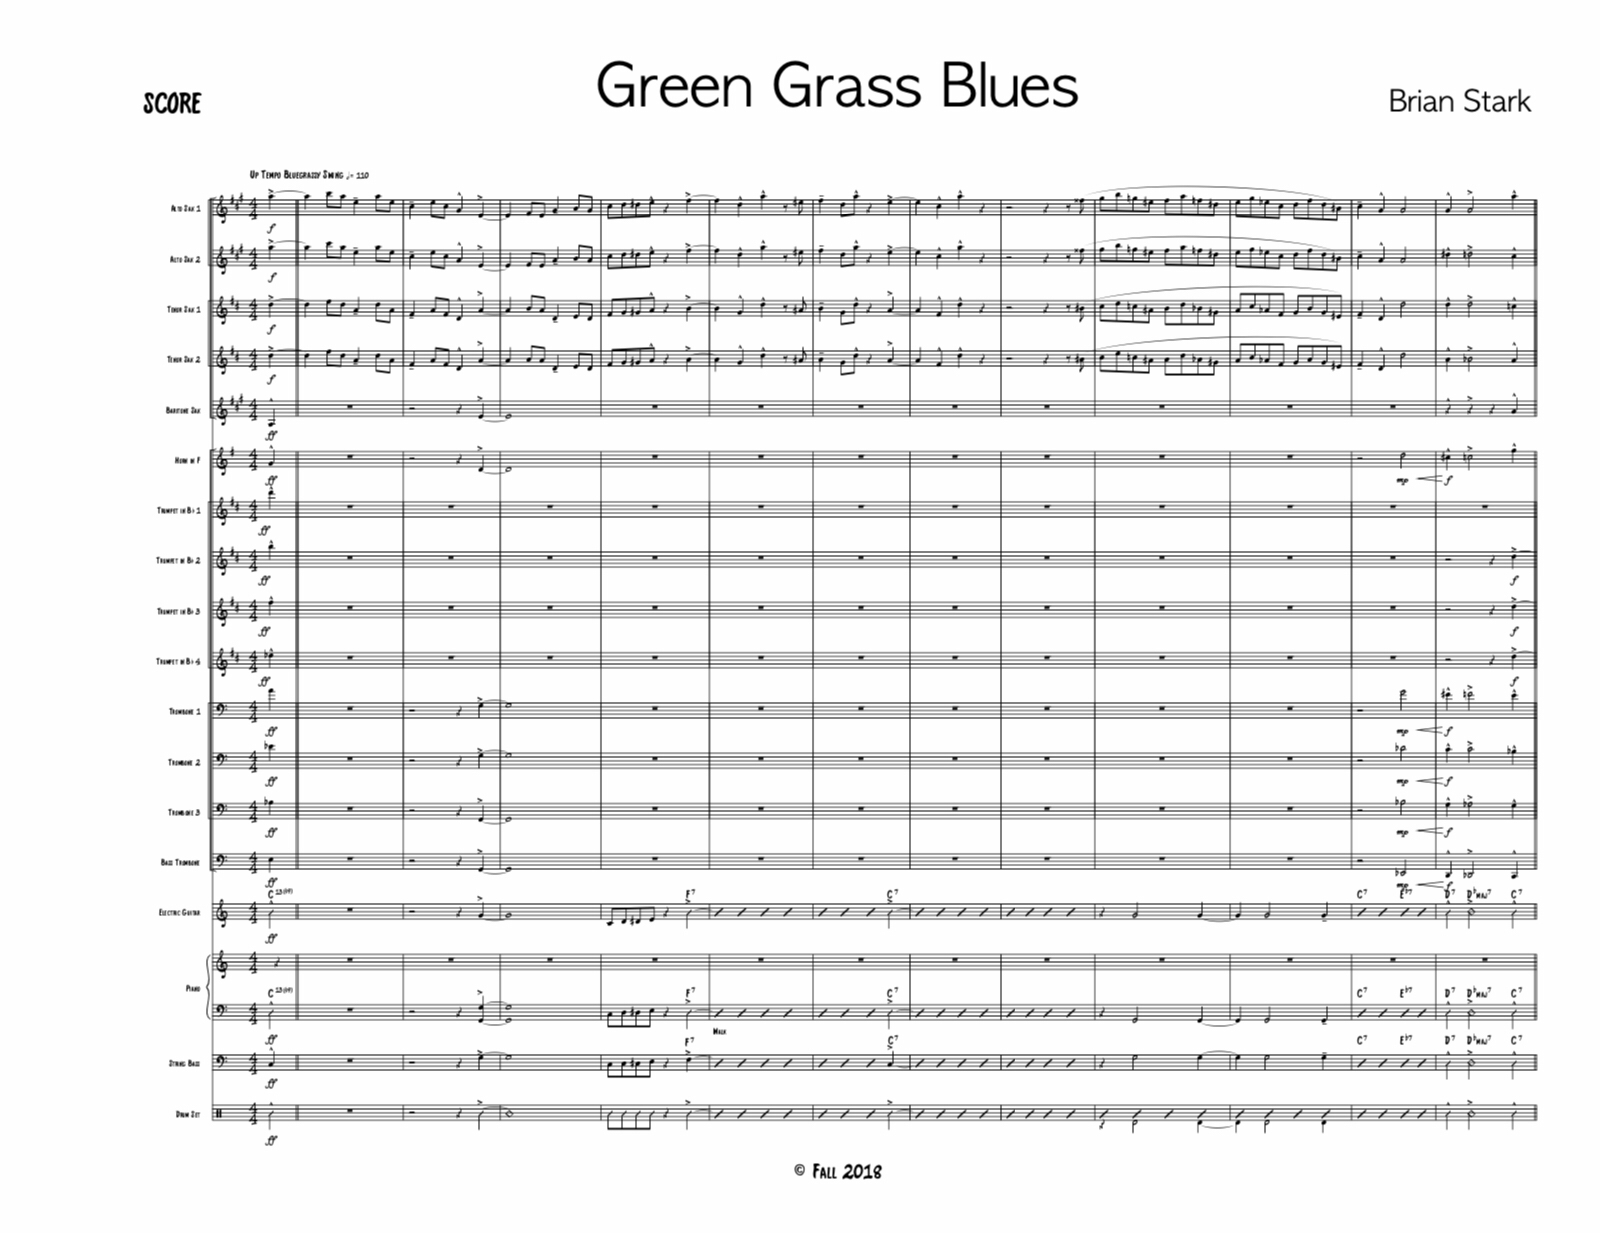 Green Grass Blues by Brian Stark